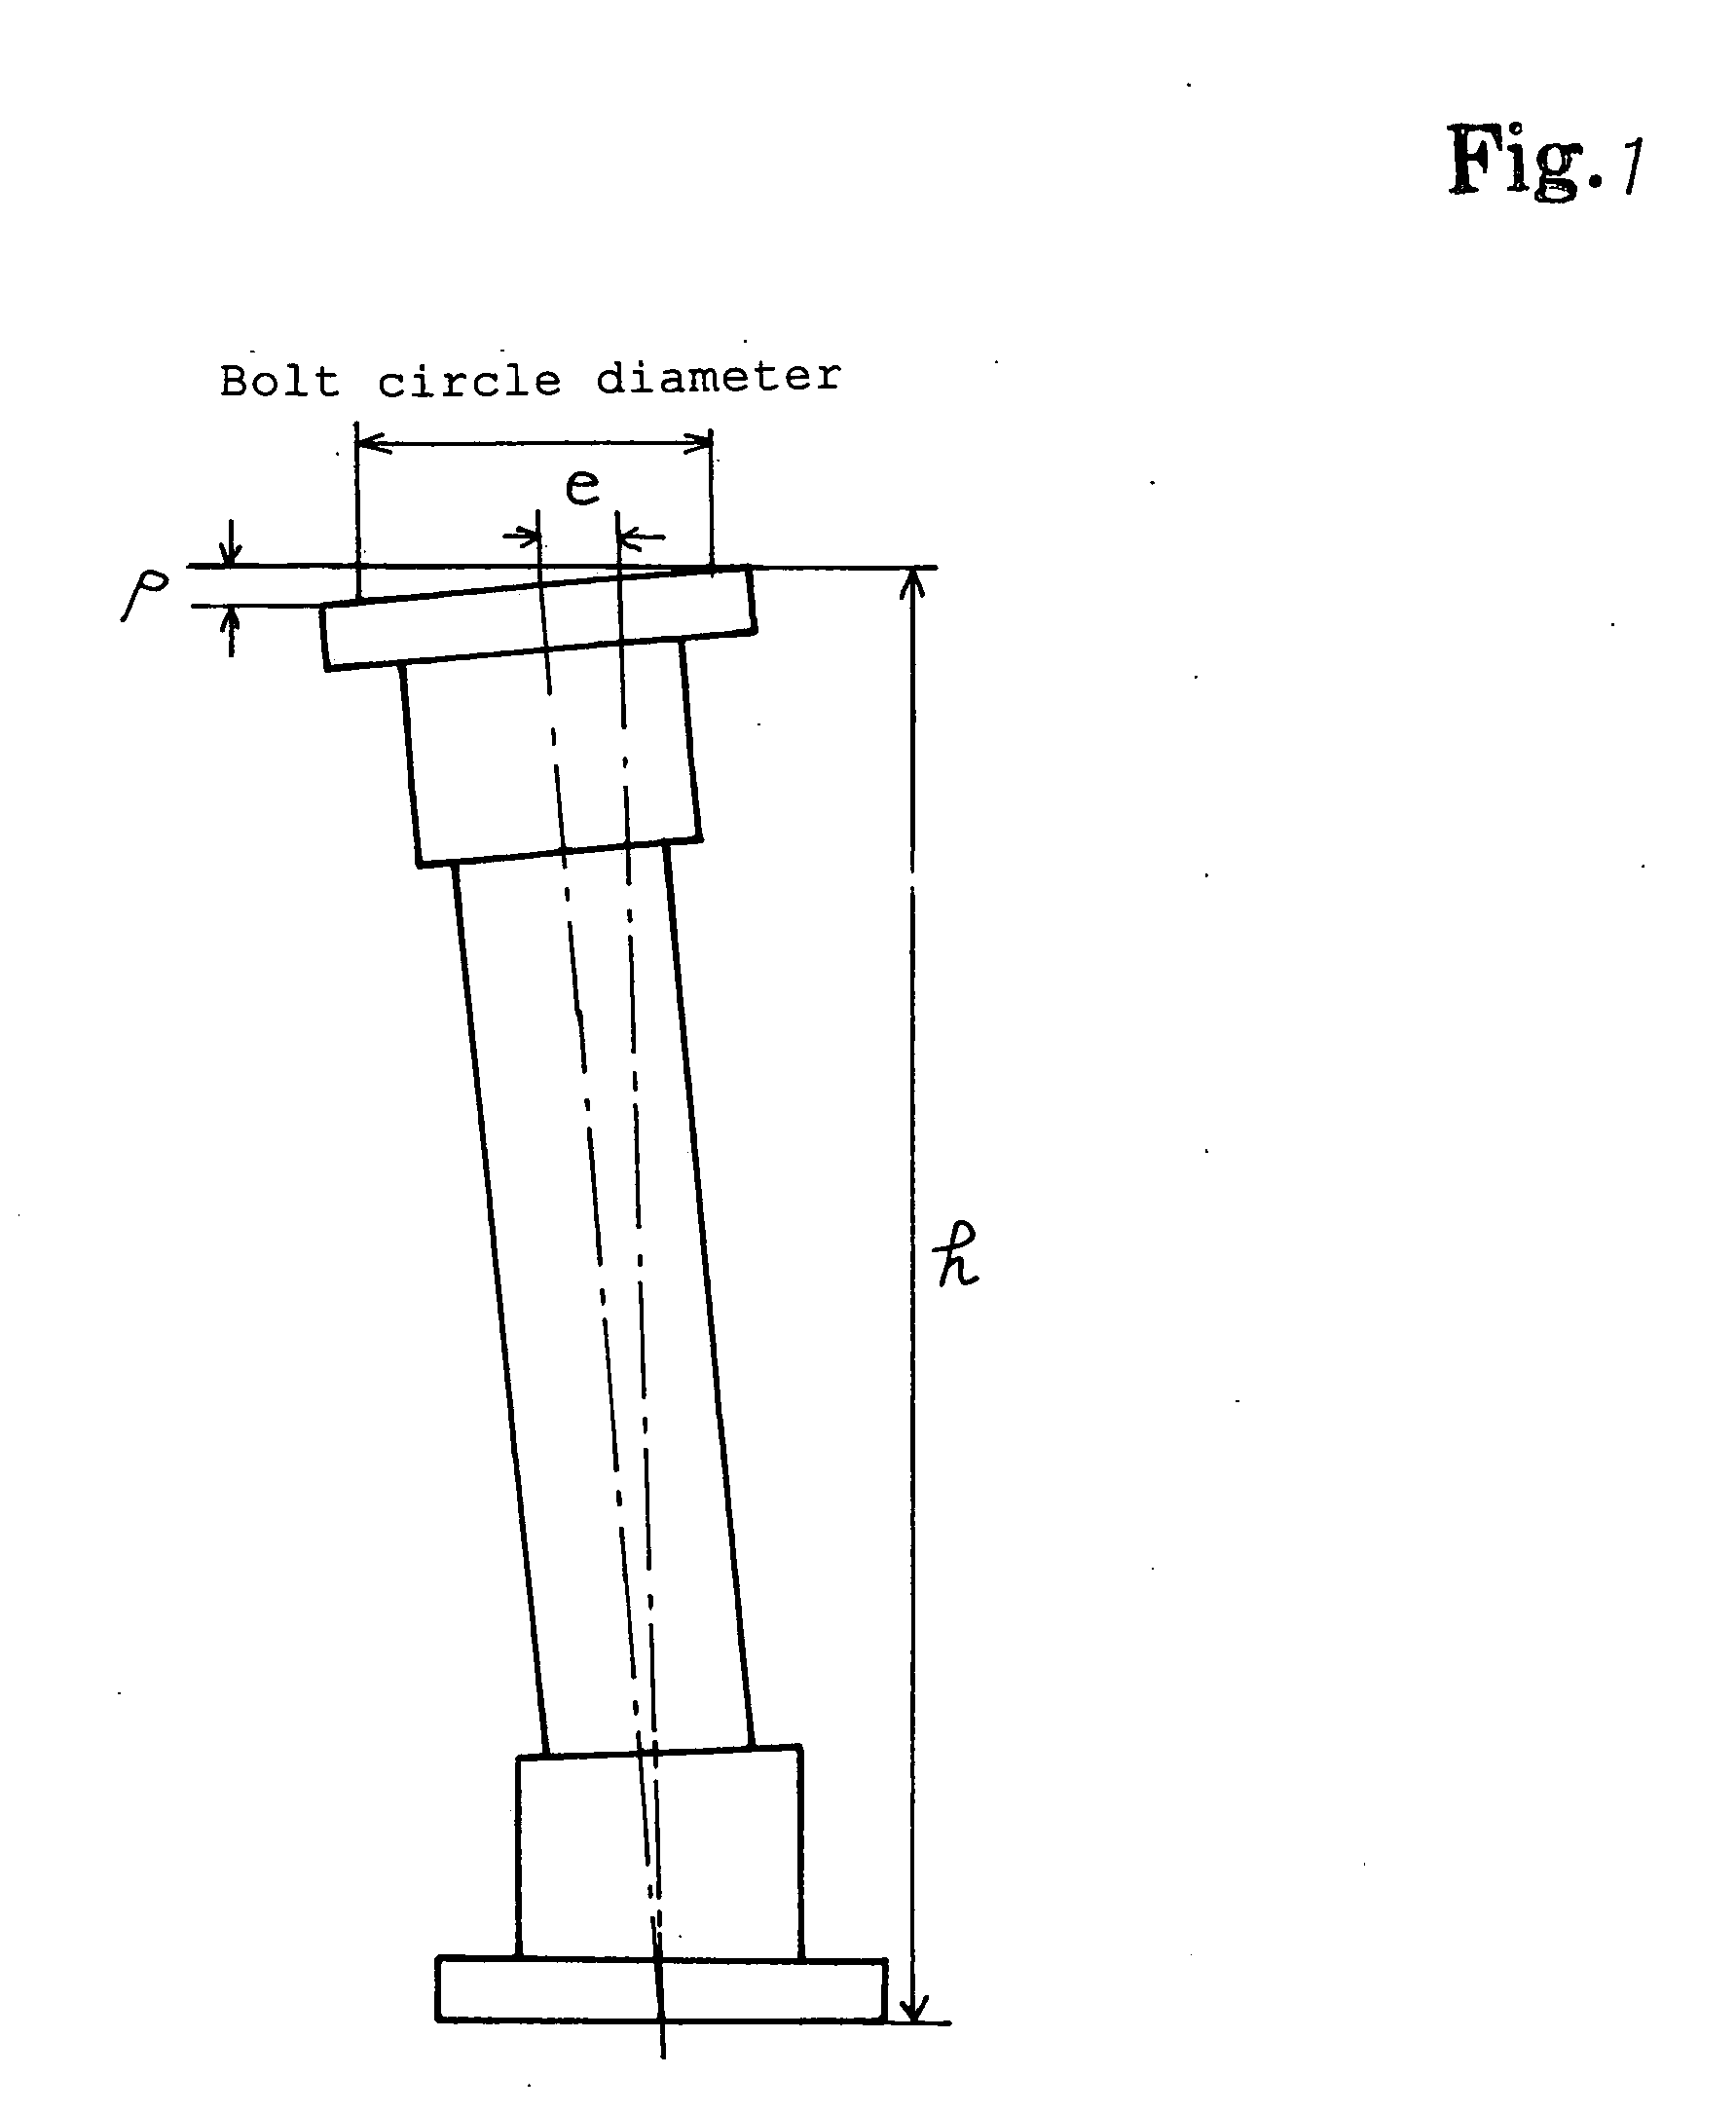 Polymer SP insulator